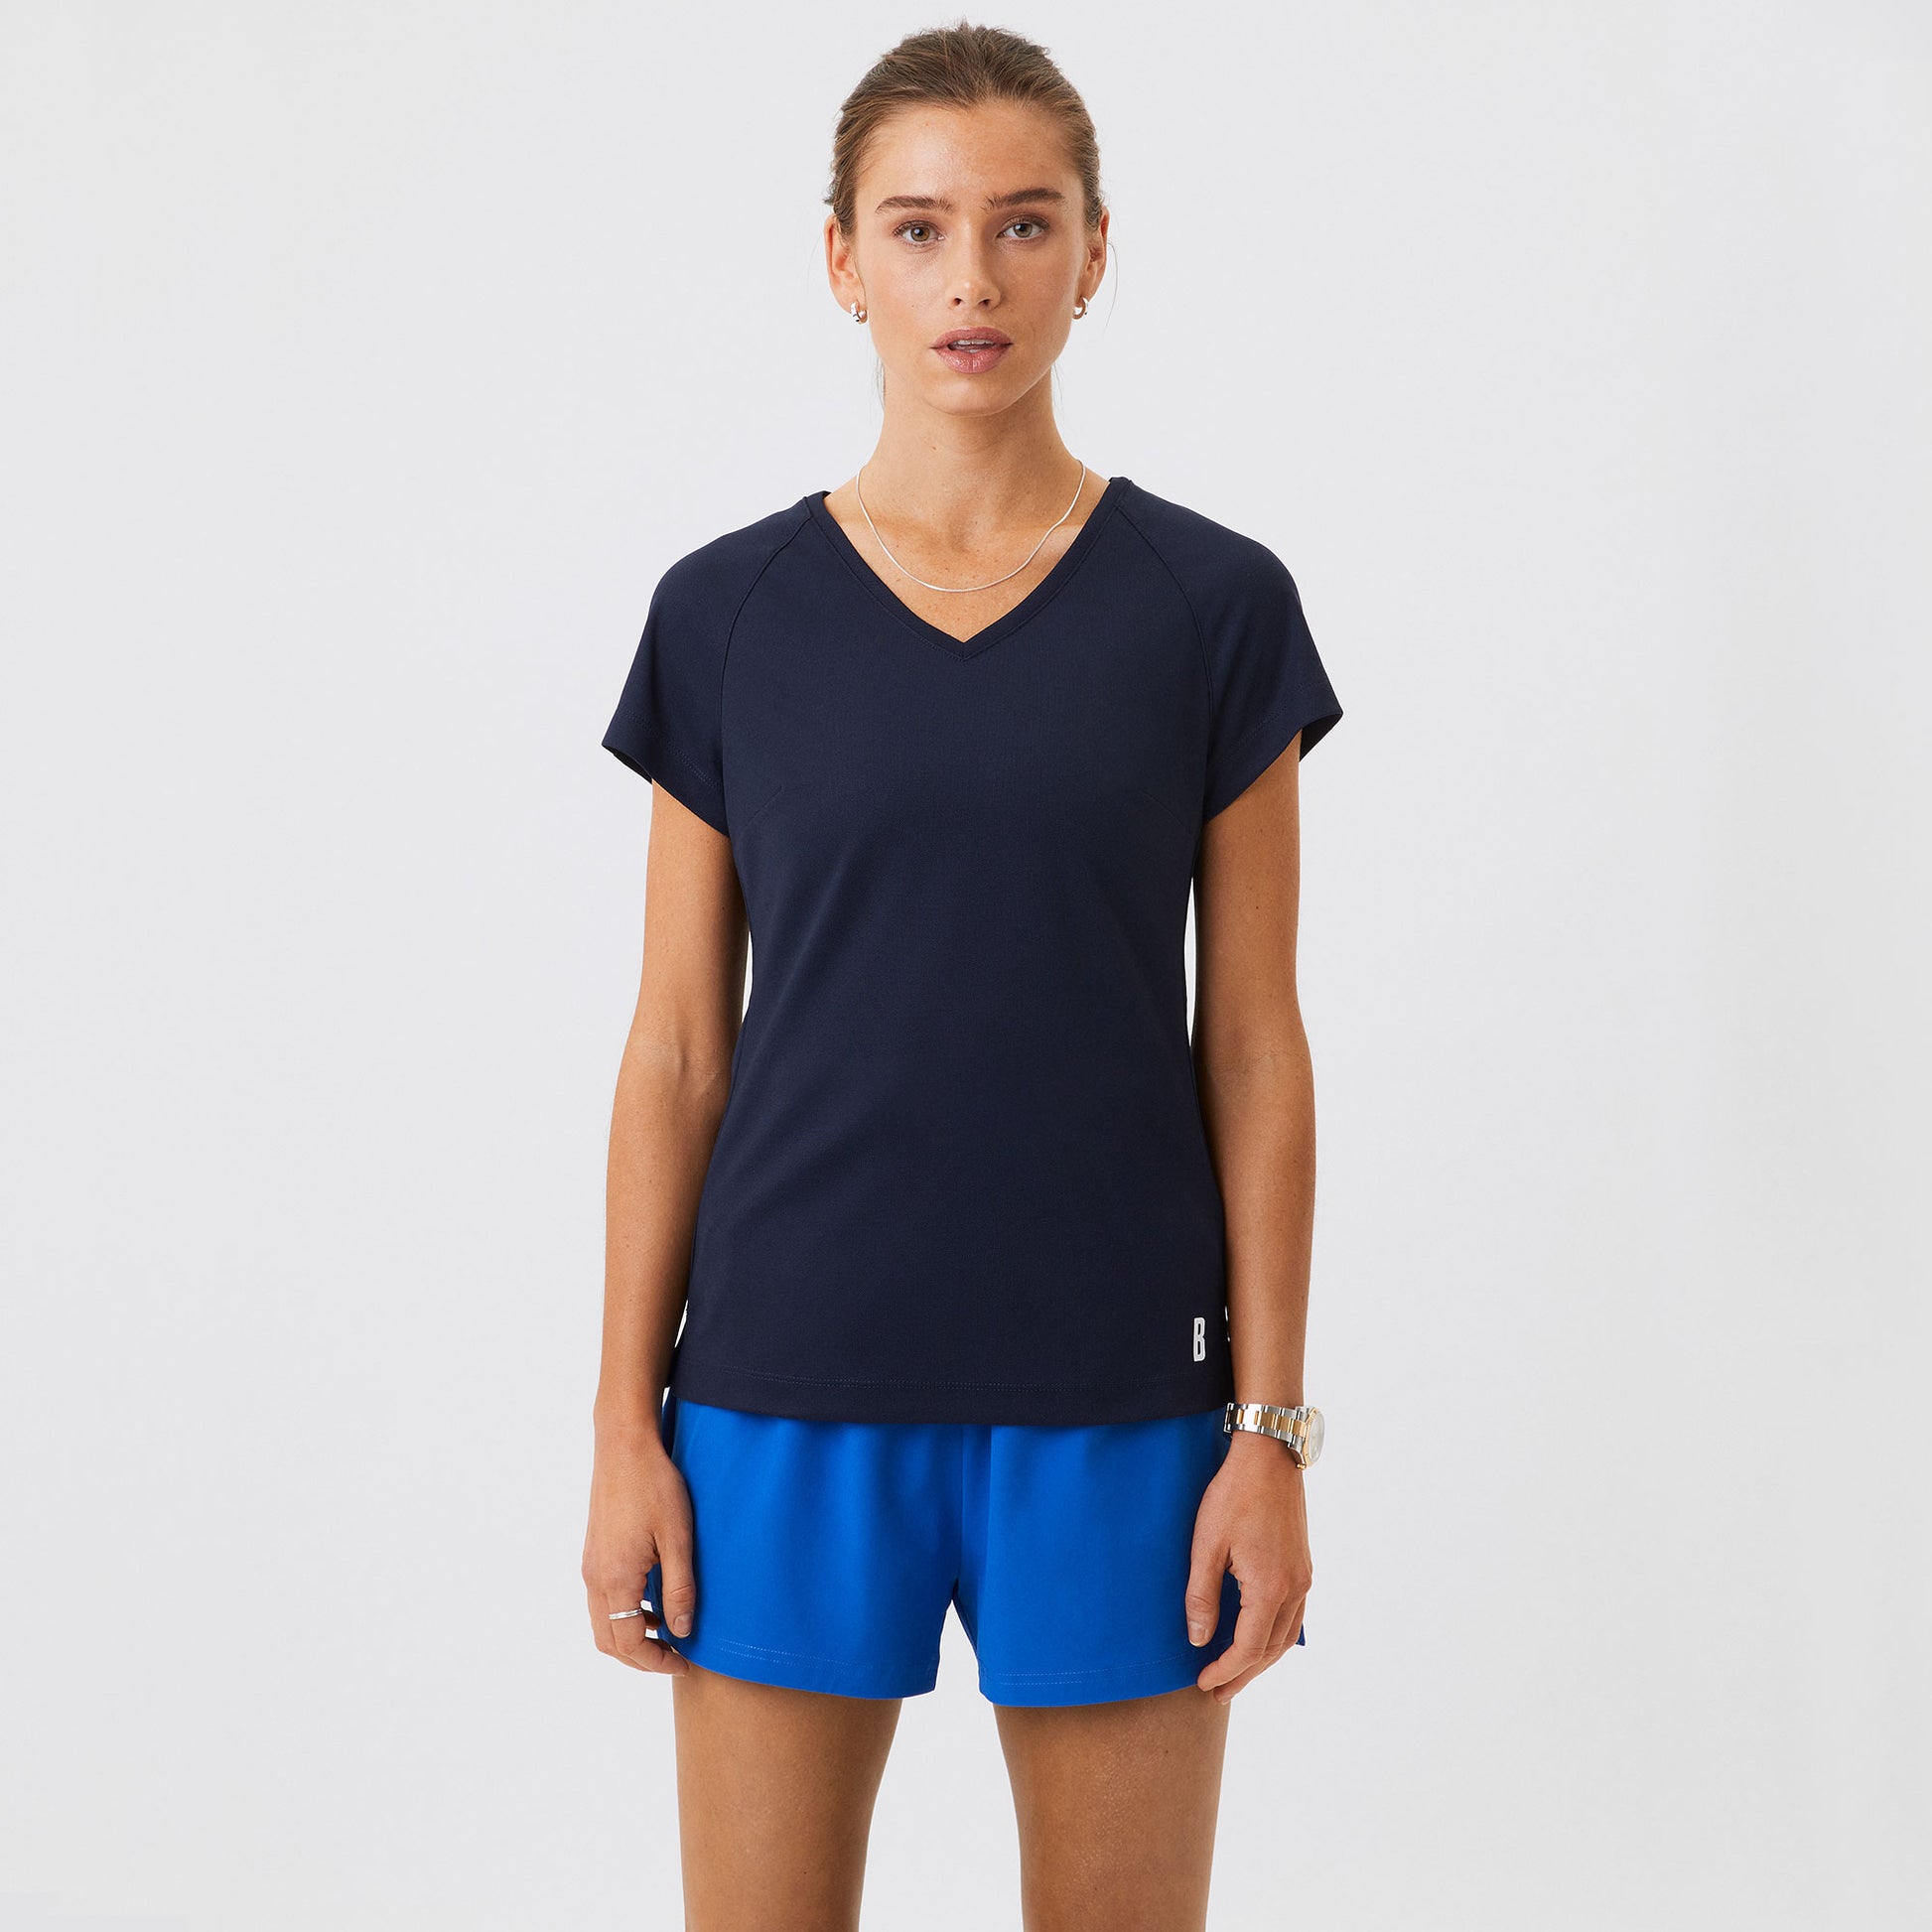 Björn Borg Ace Women's Tennis Shirt Dark Blue (5)